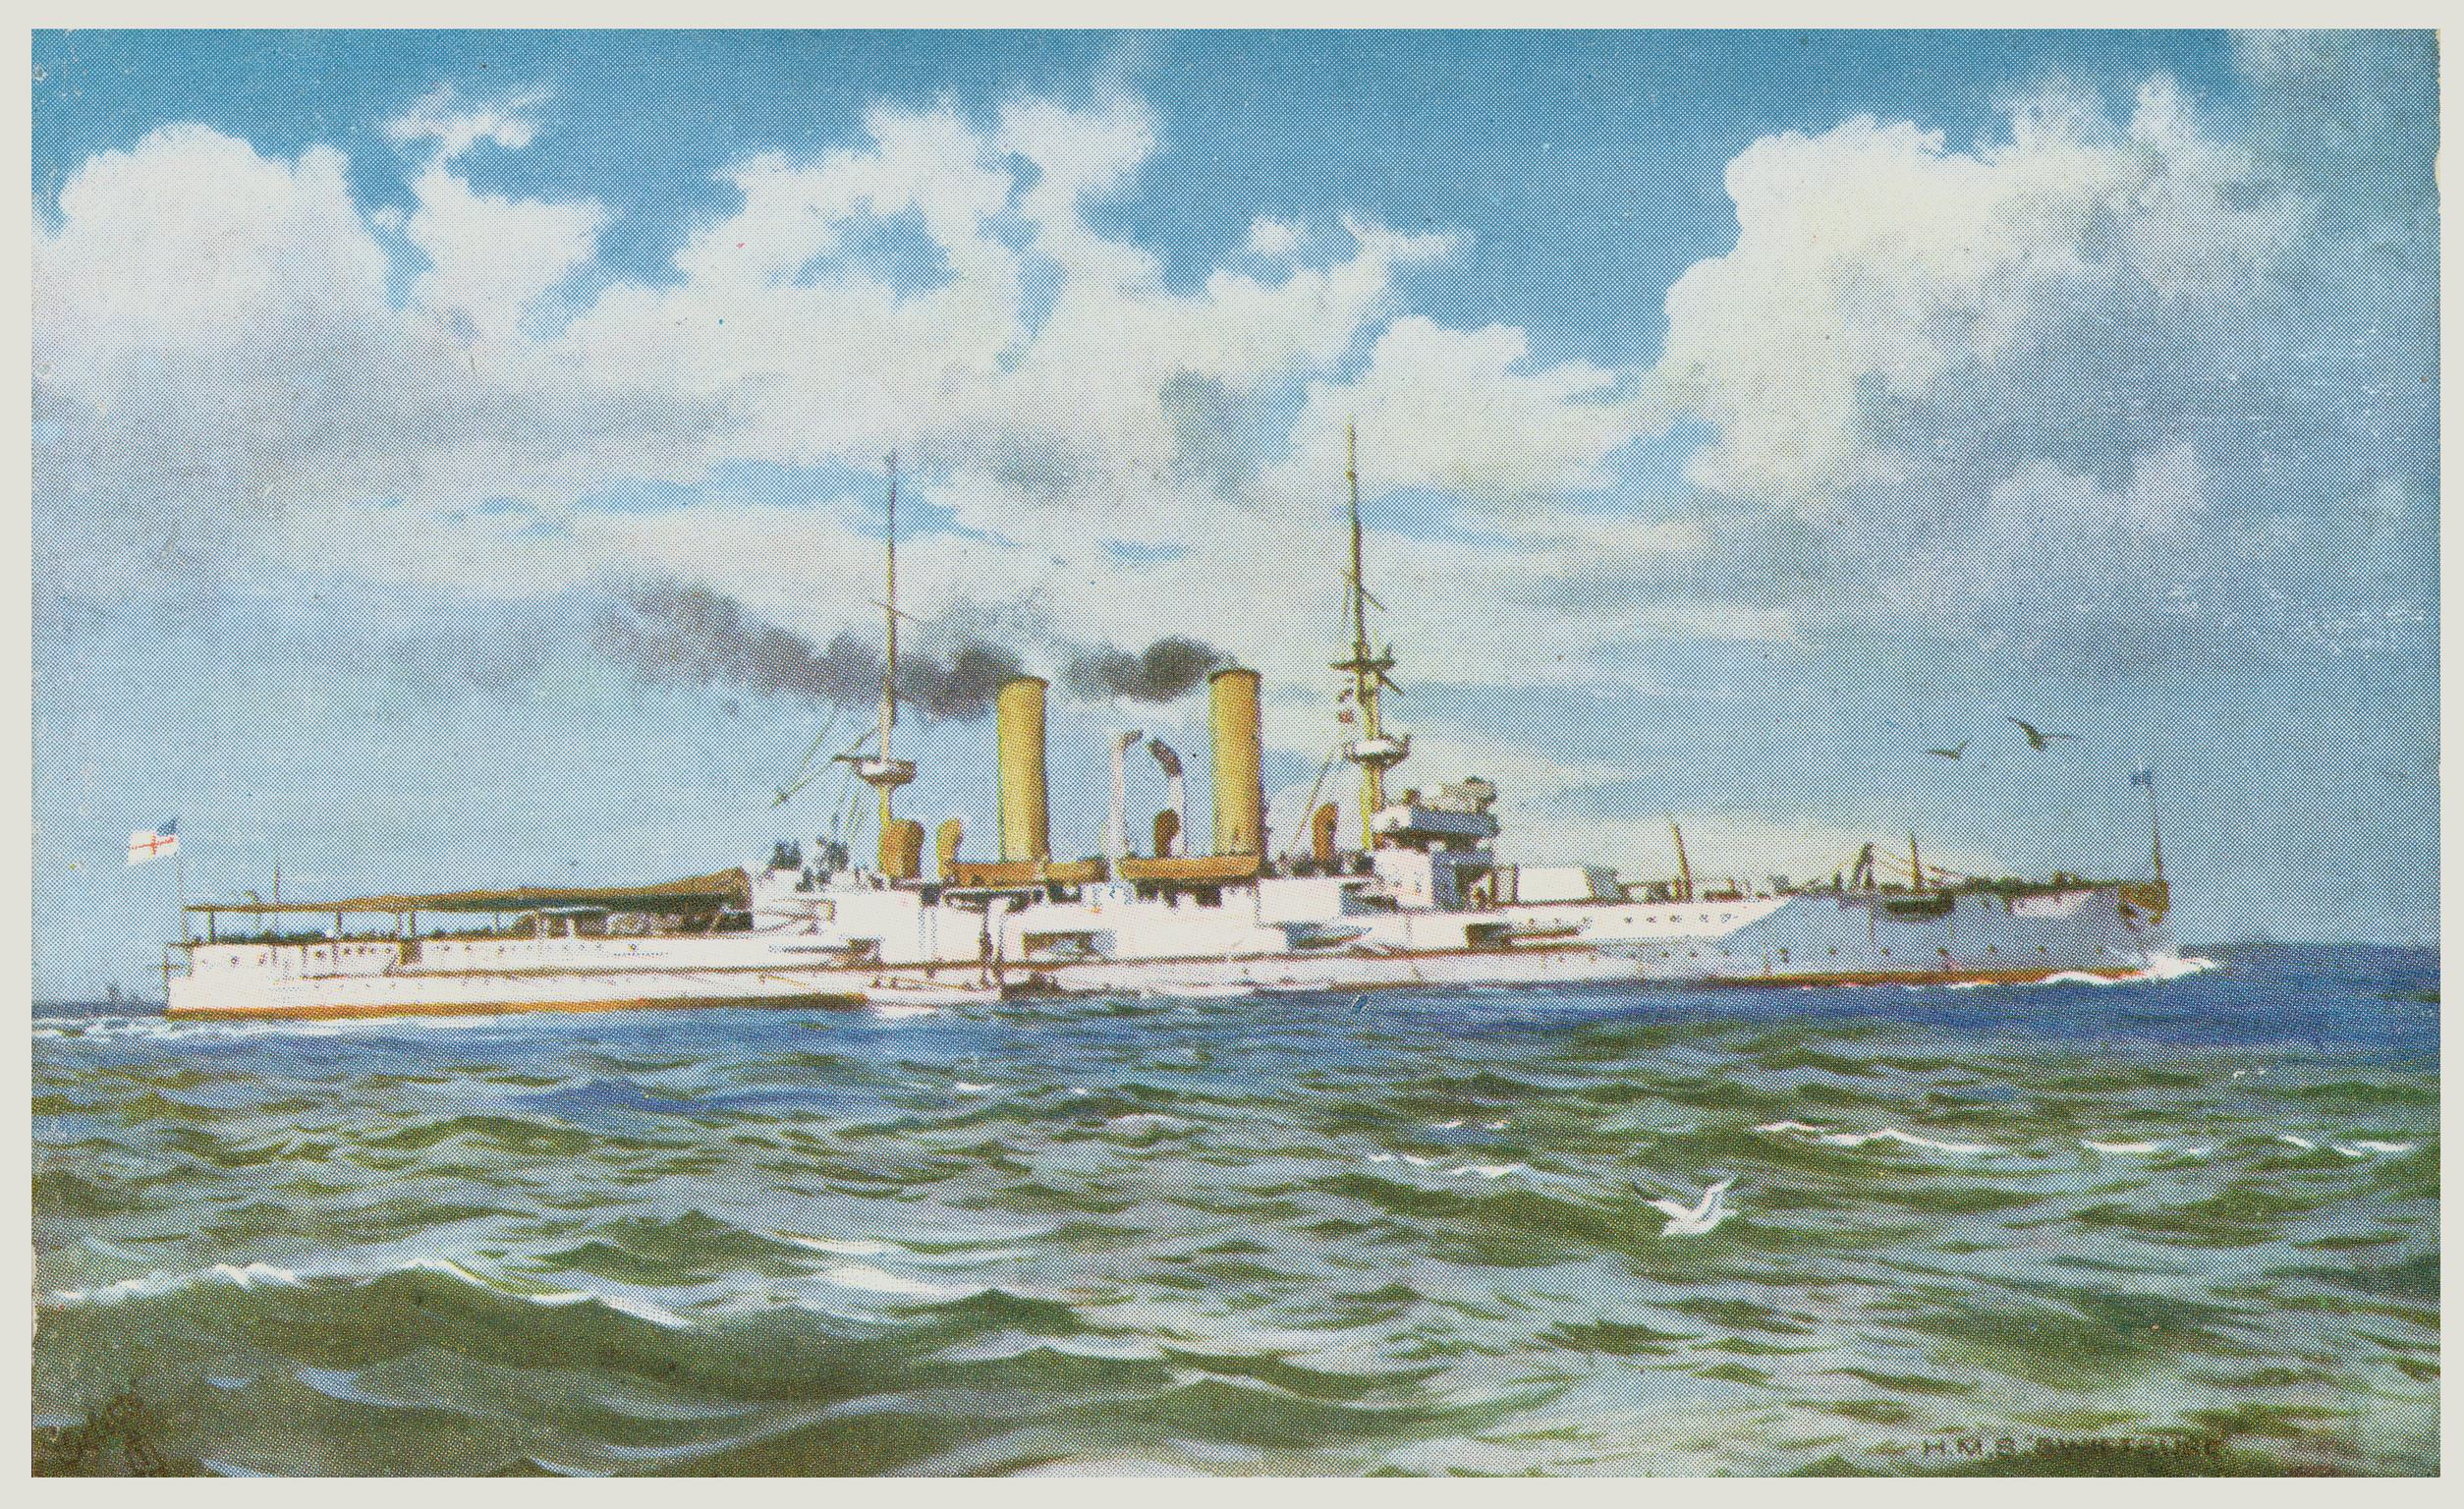 H.M.S. SWIFTSURE (postcard)